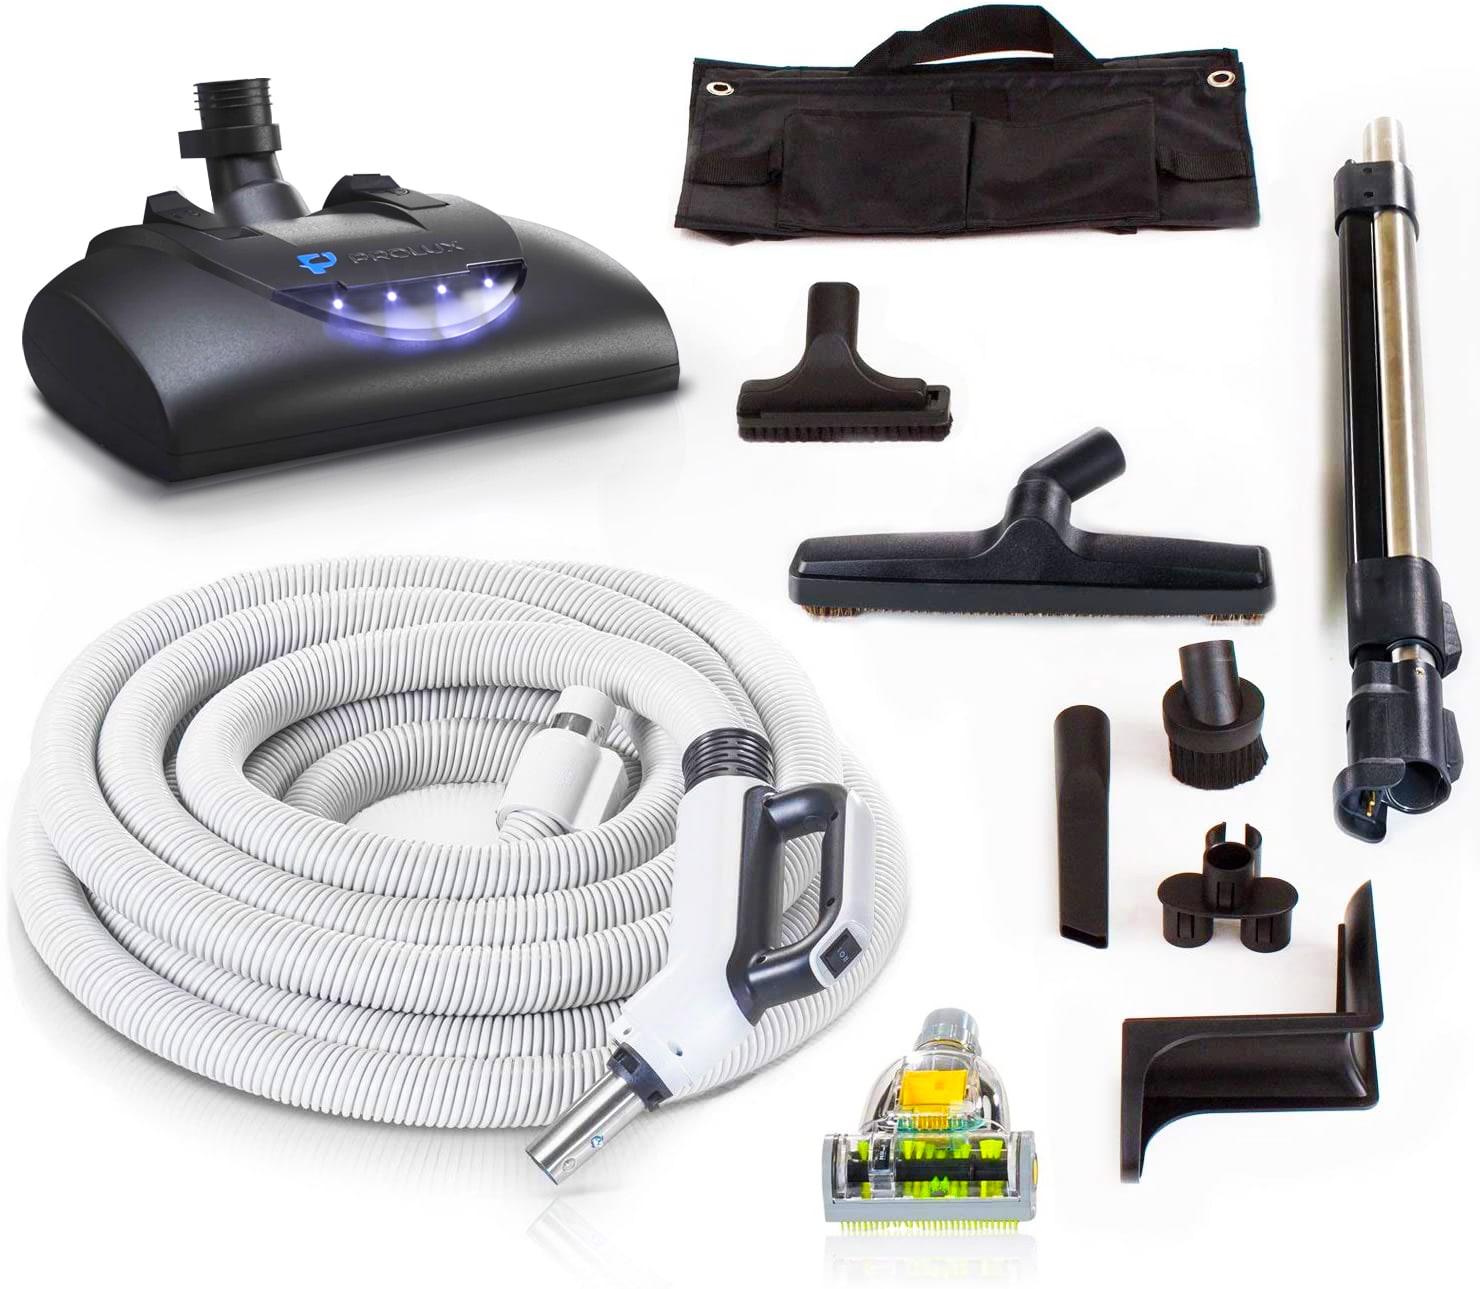 Vacuum Attachment Kits at